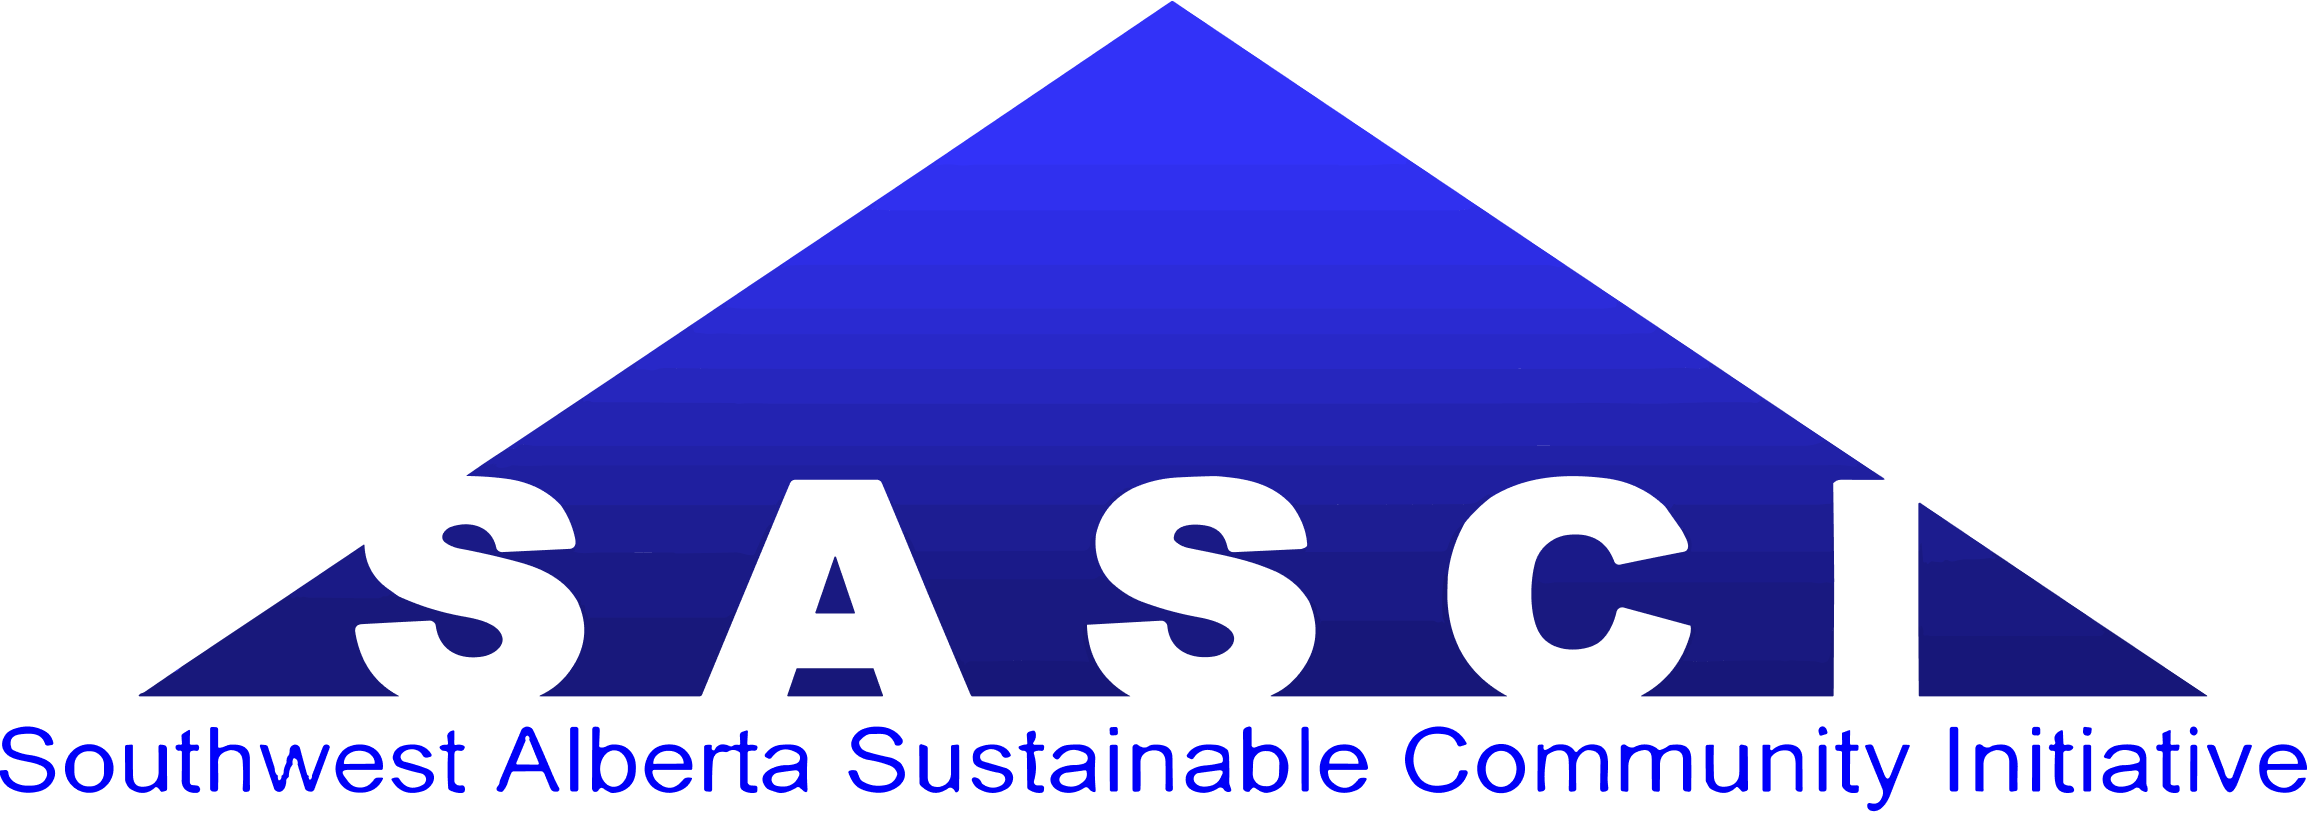 Logo for Southwest Alberta Sustainable Community Initiative (SASCI) on a transparent background